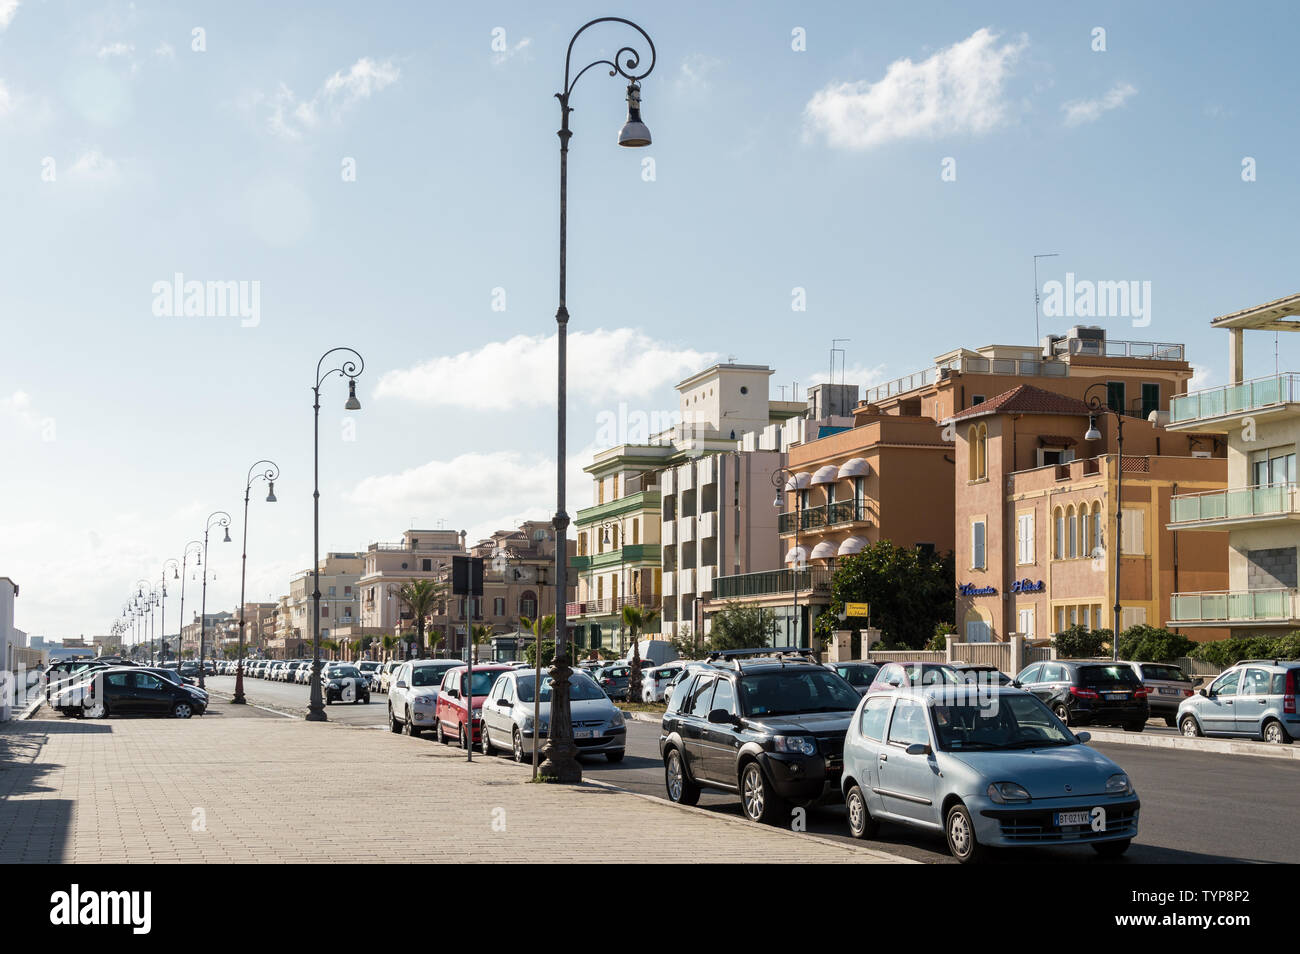 Lido di Ostia, Italy - July 23rd 2014: Street view of beach town near Rome Stock Photo